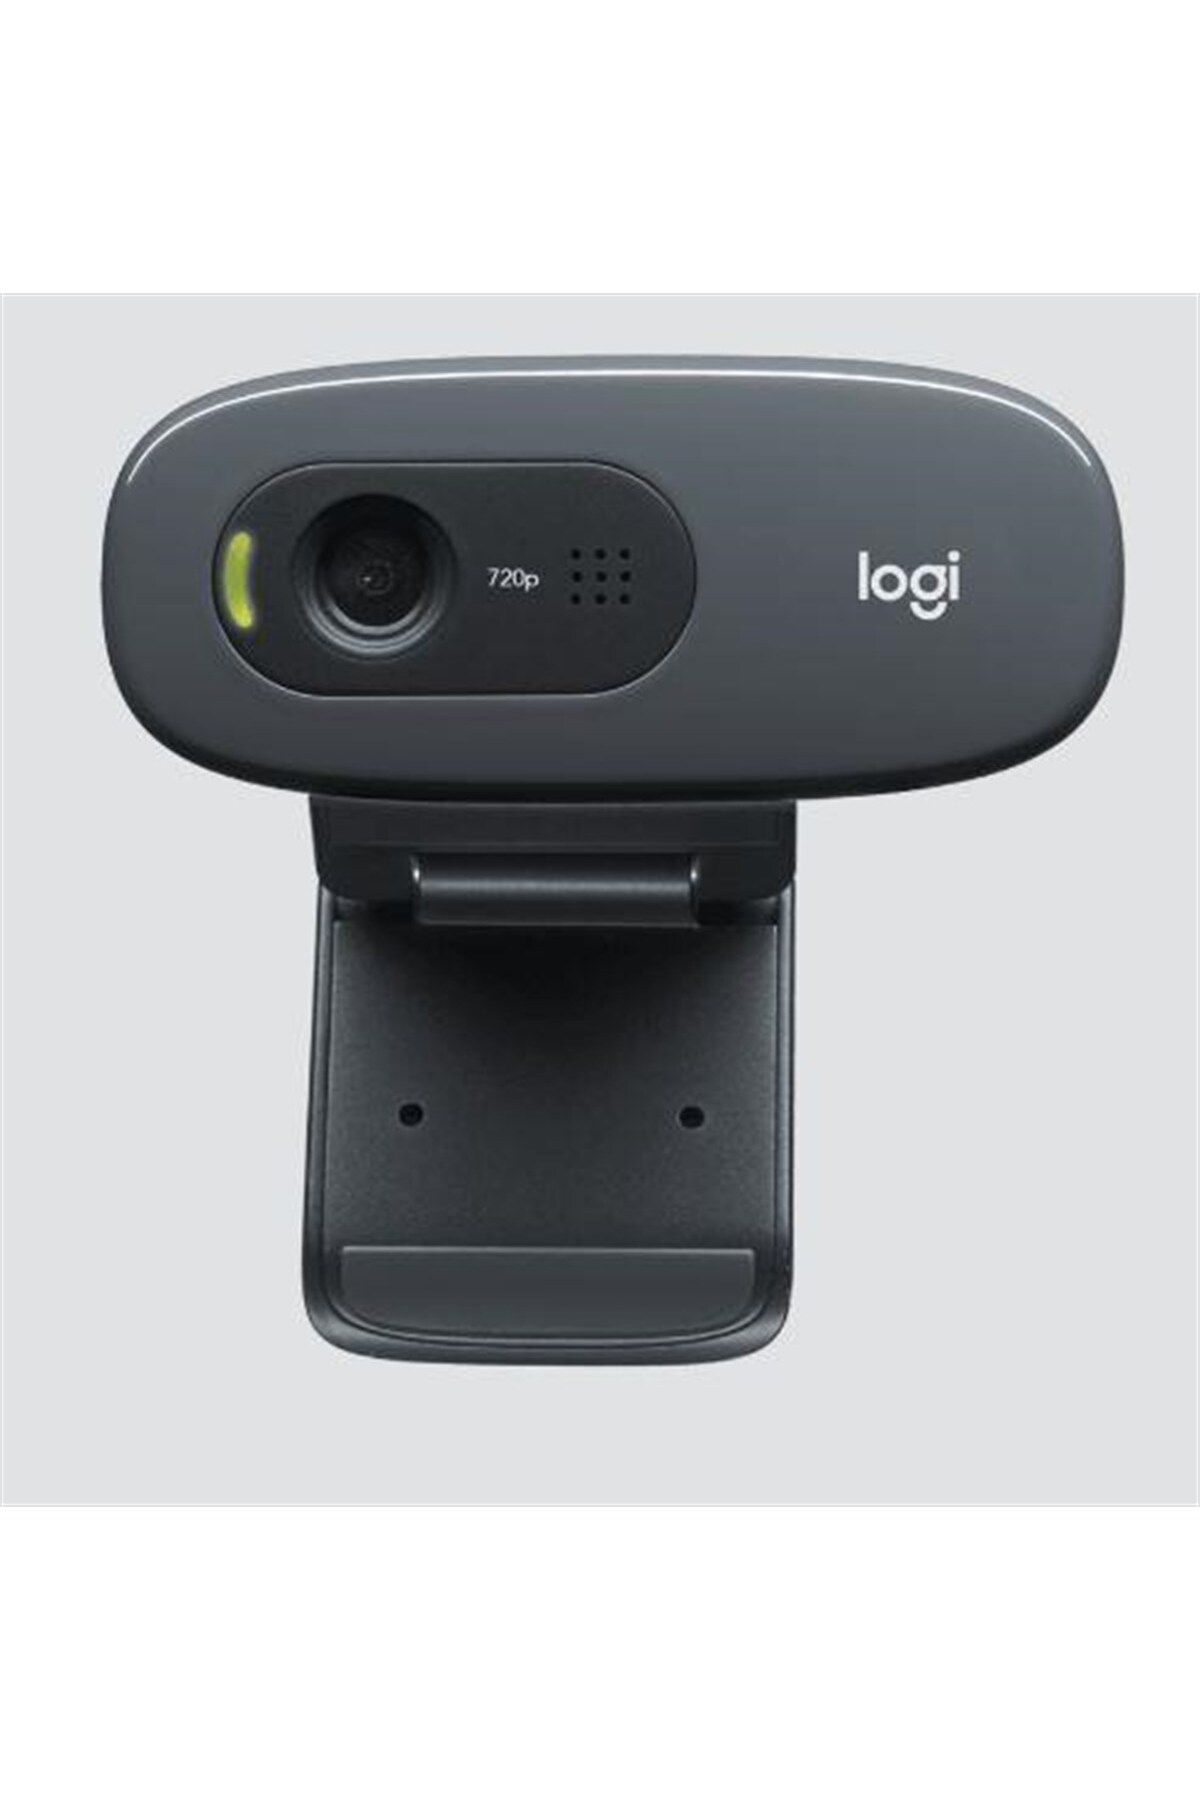 logitech C270 Hd 20p Mikrofonlu Webcam Si?yah 960-001063